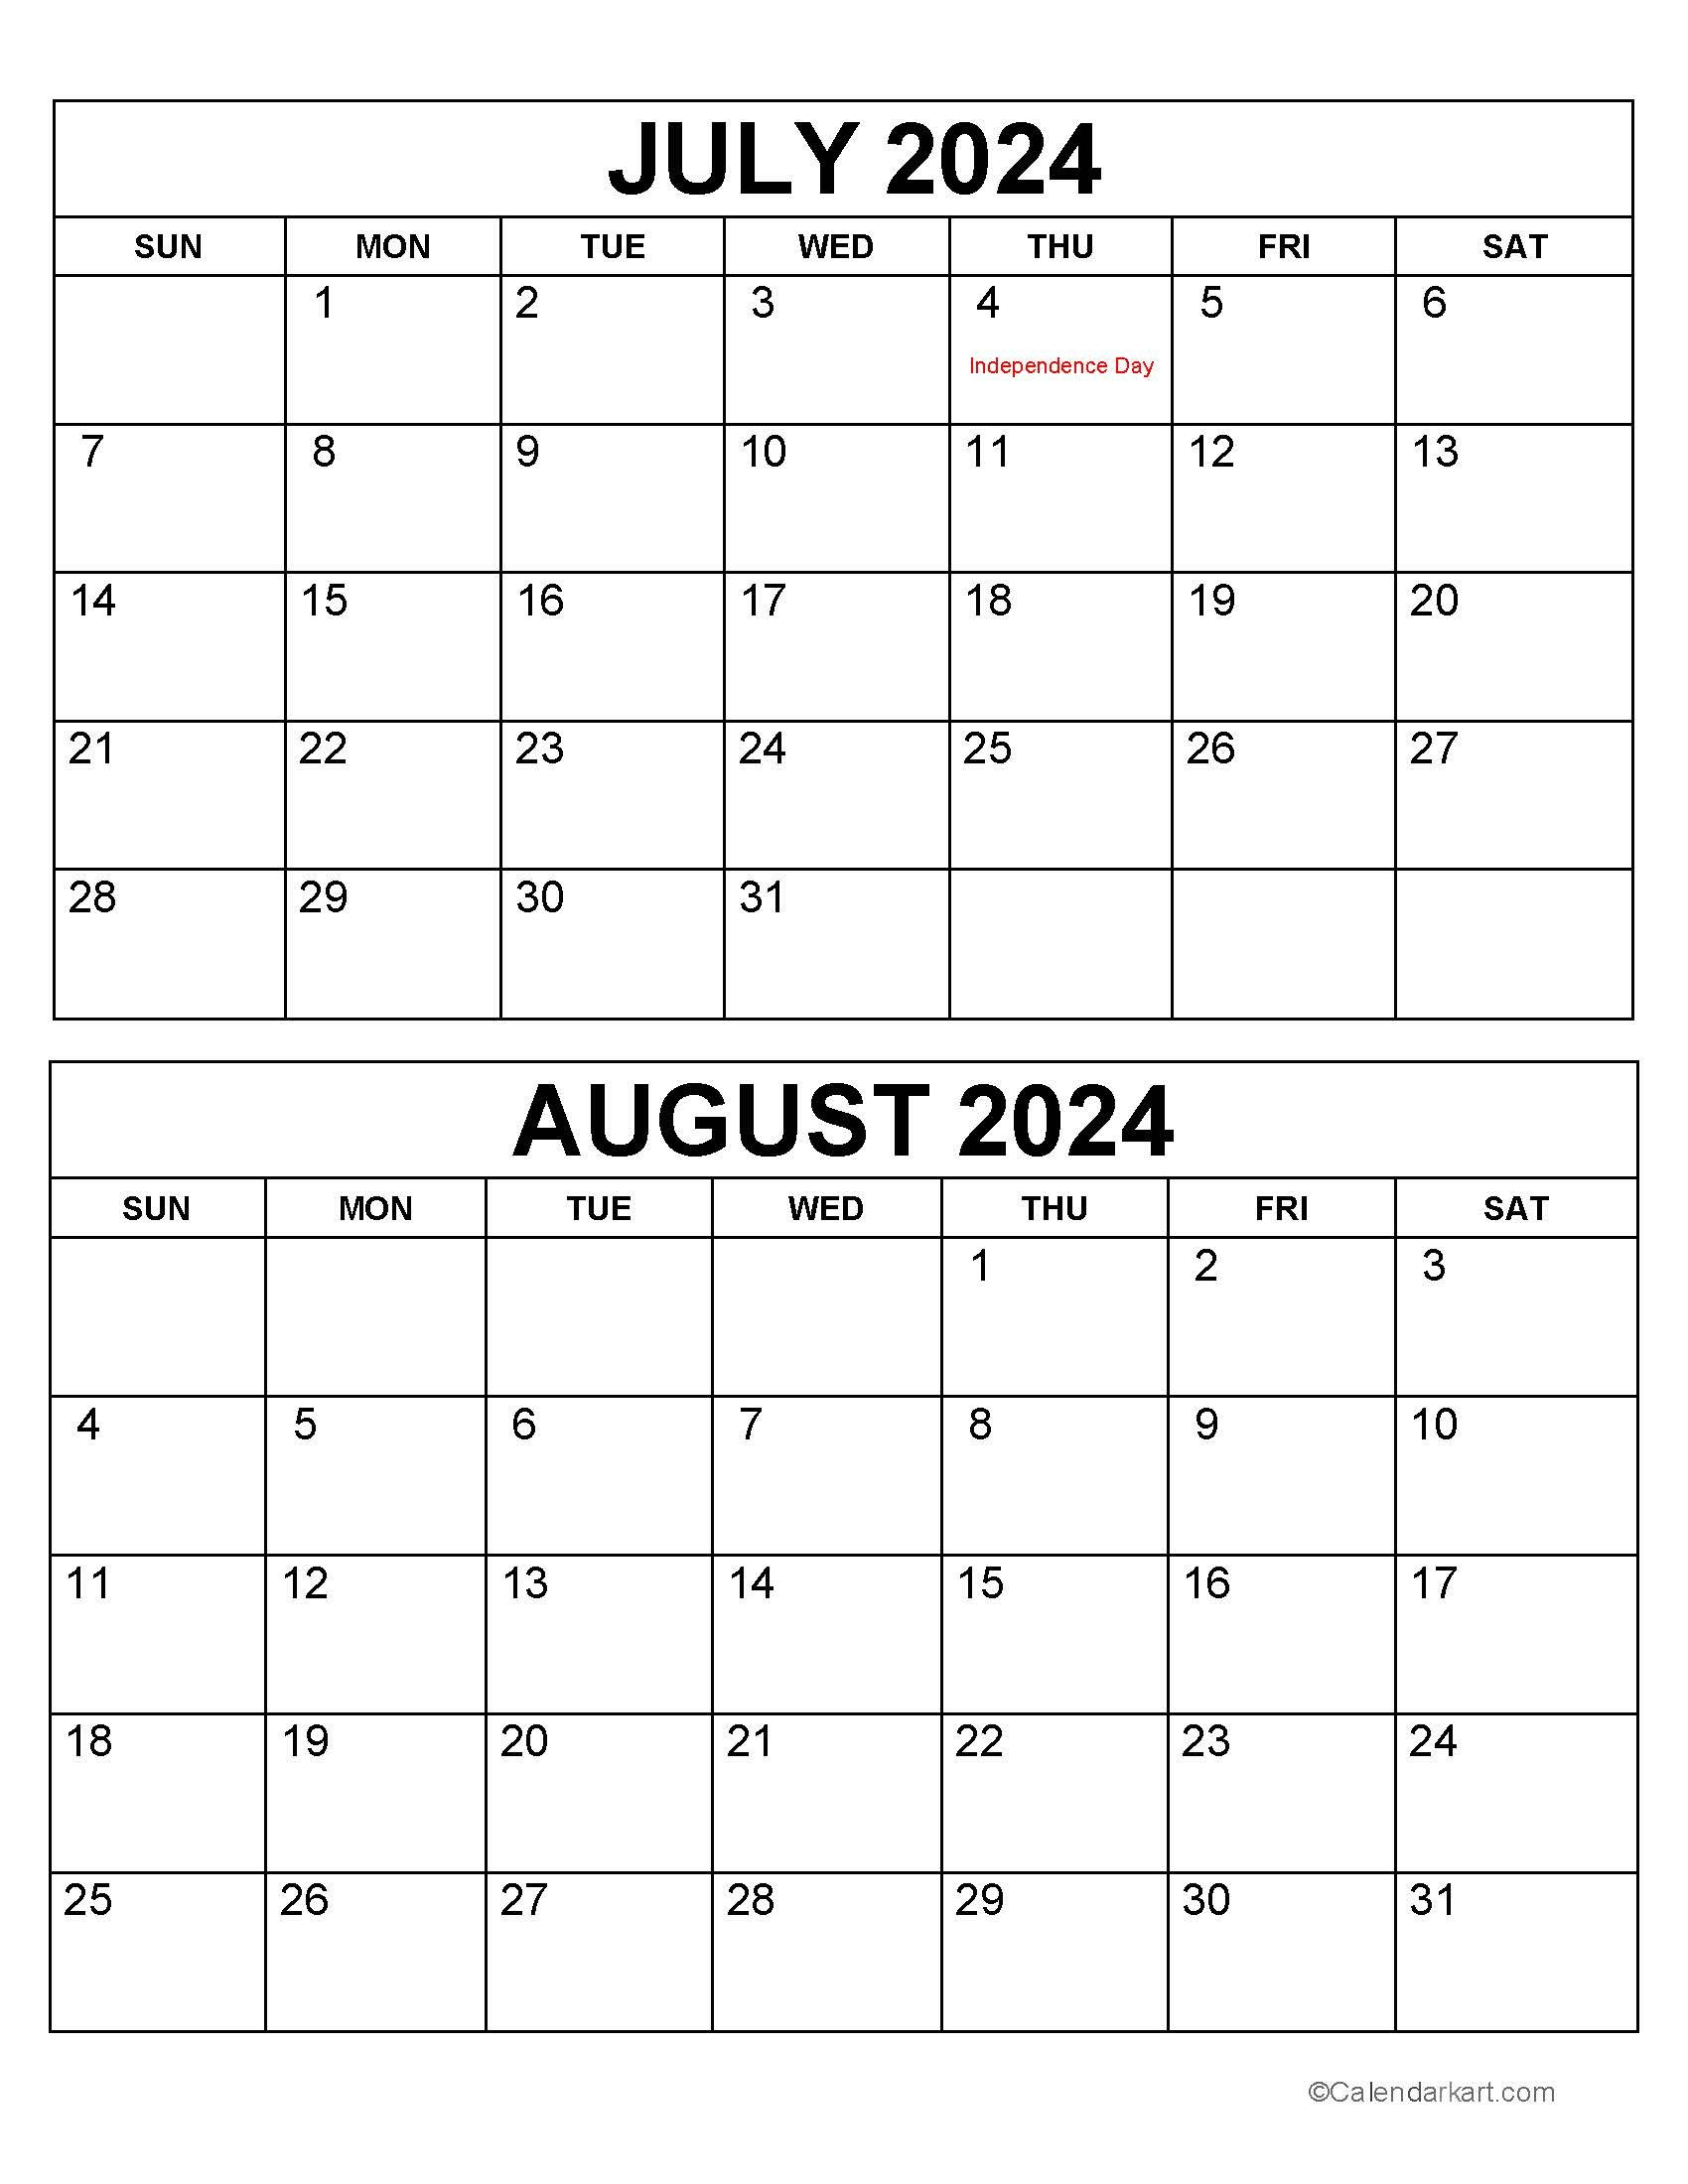 Printable July August 2024 Calendar | Calendarkart within July and Aug 2024 Calendar